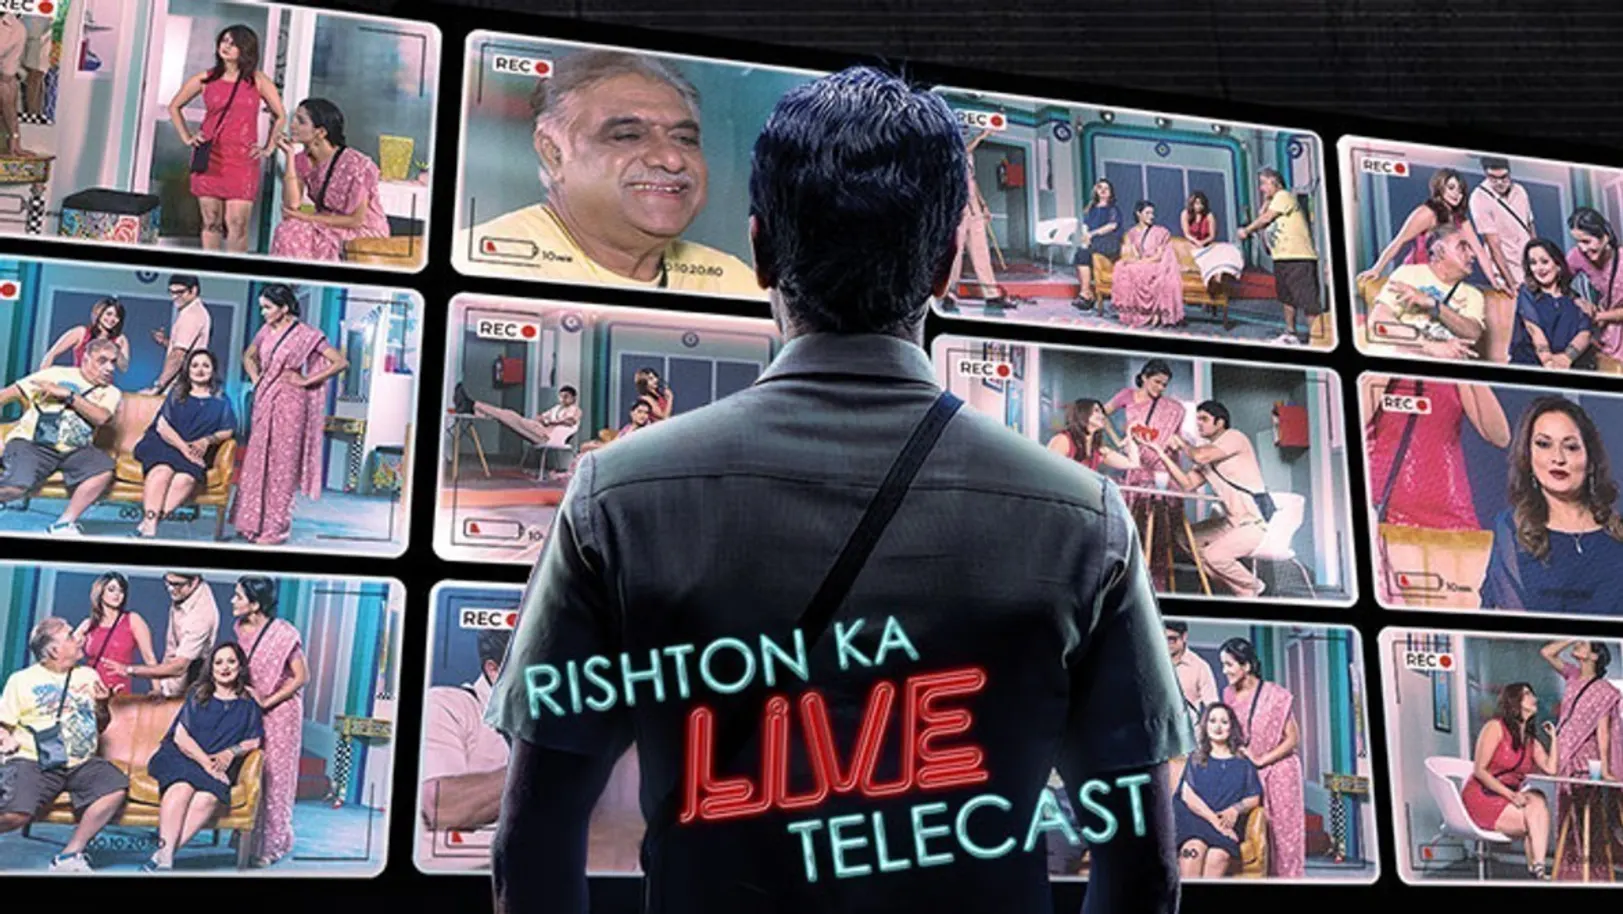 Rishton Ka Live Telecast Movie